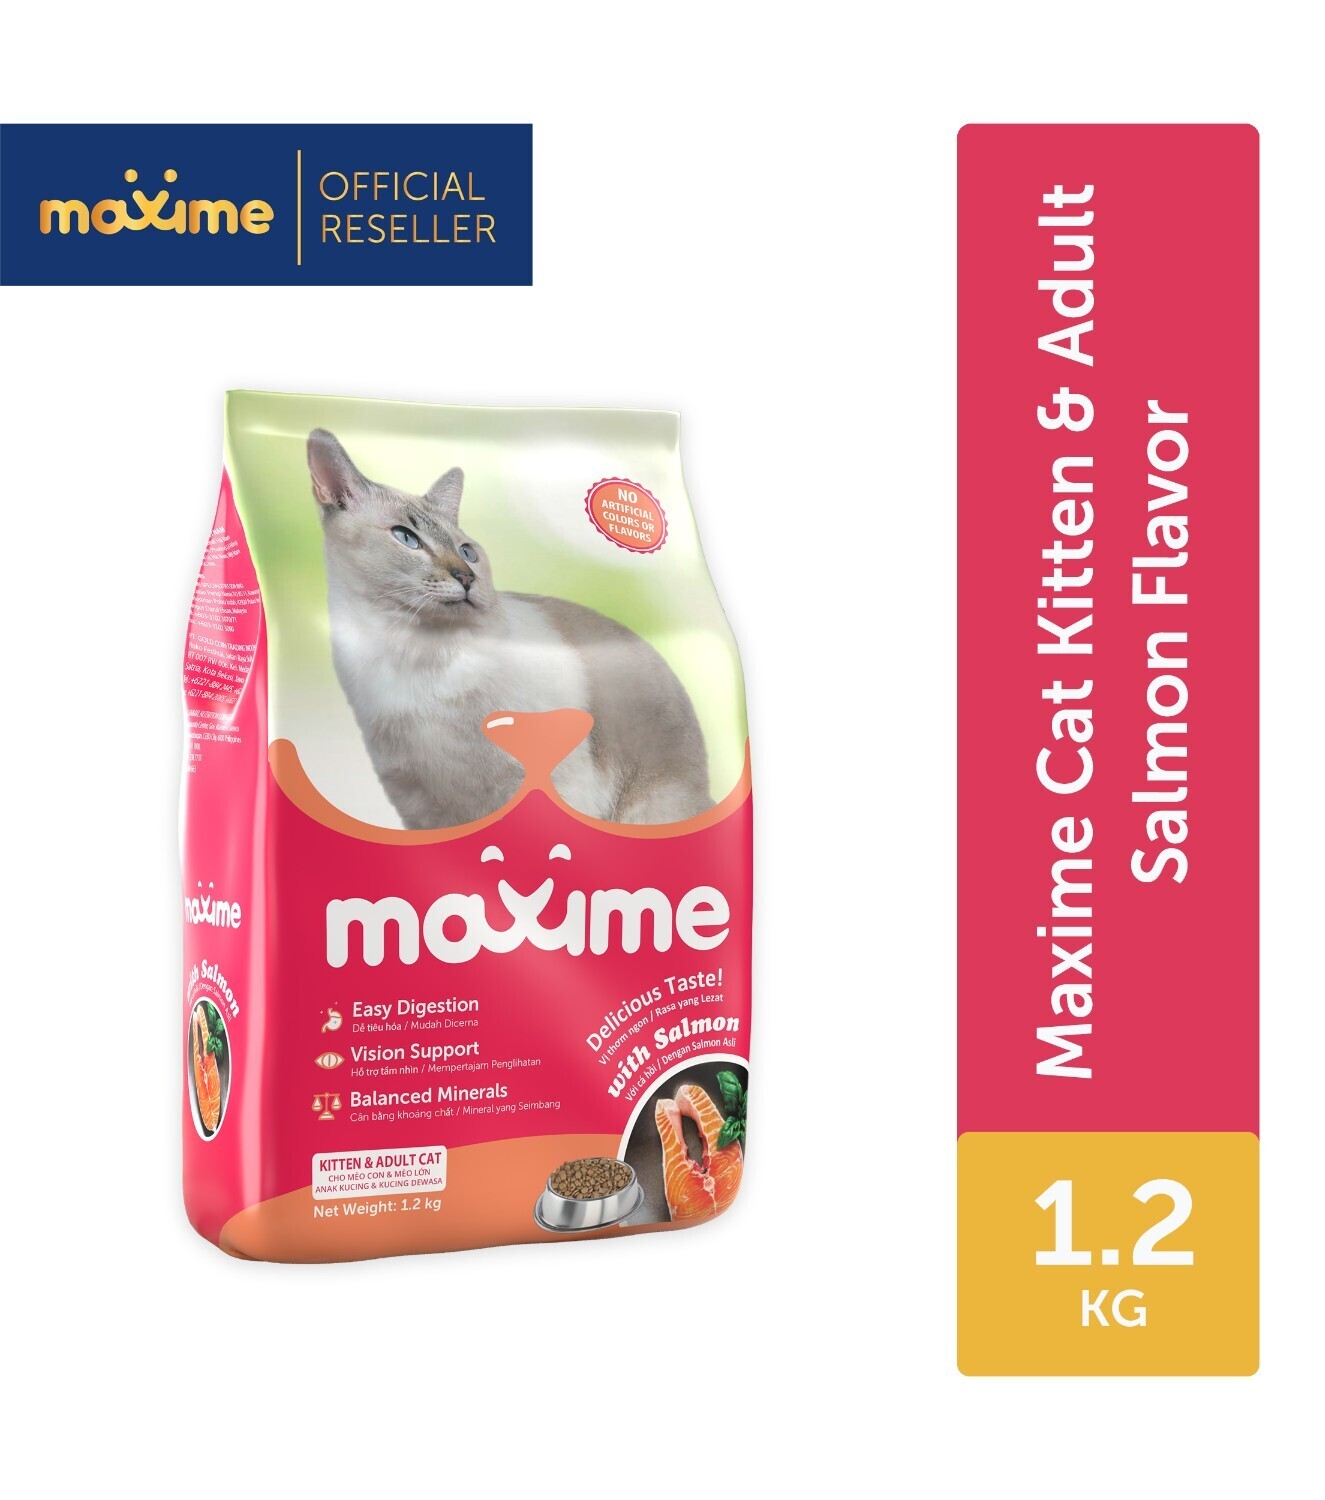 Maxime Standard Kitten Cat - Salmon - 1.2kg Packaging